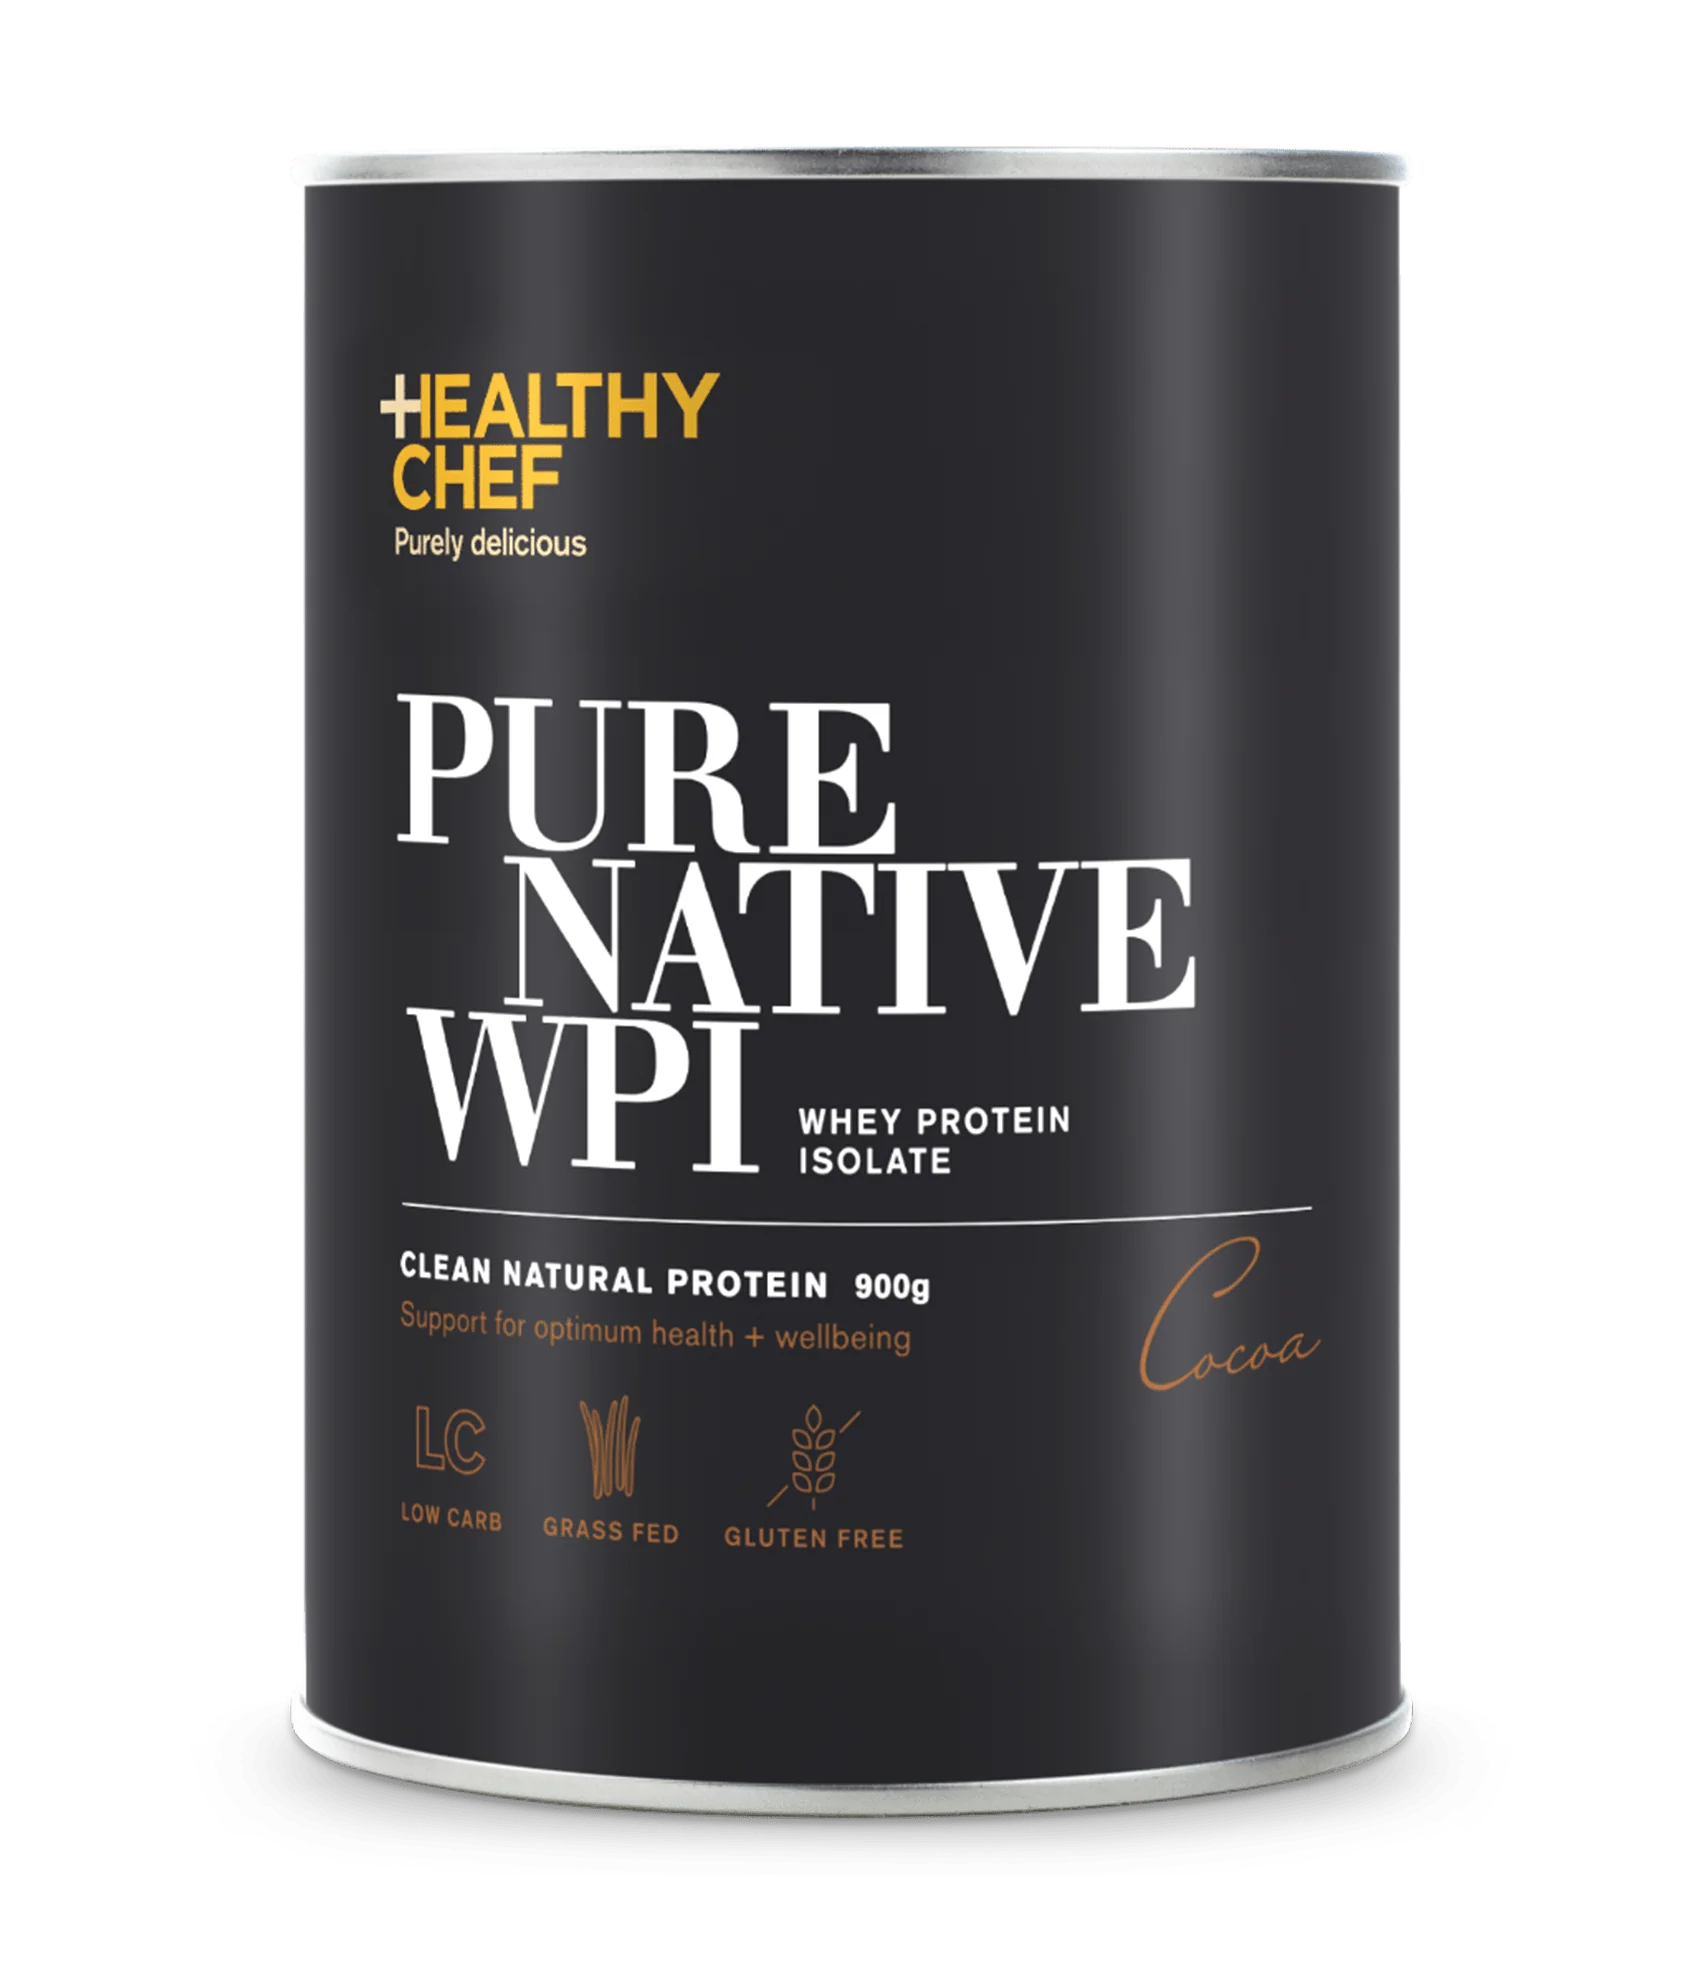 The Healthy Chef Pure Native WPI (Whey Protein Isolate) Cocoa